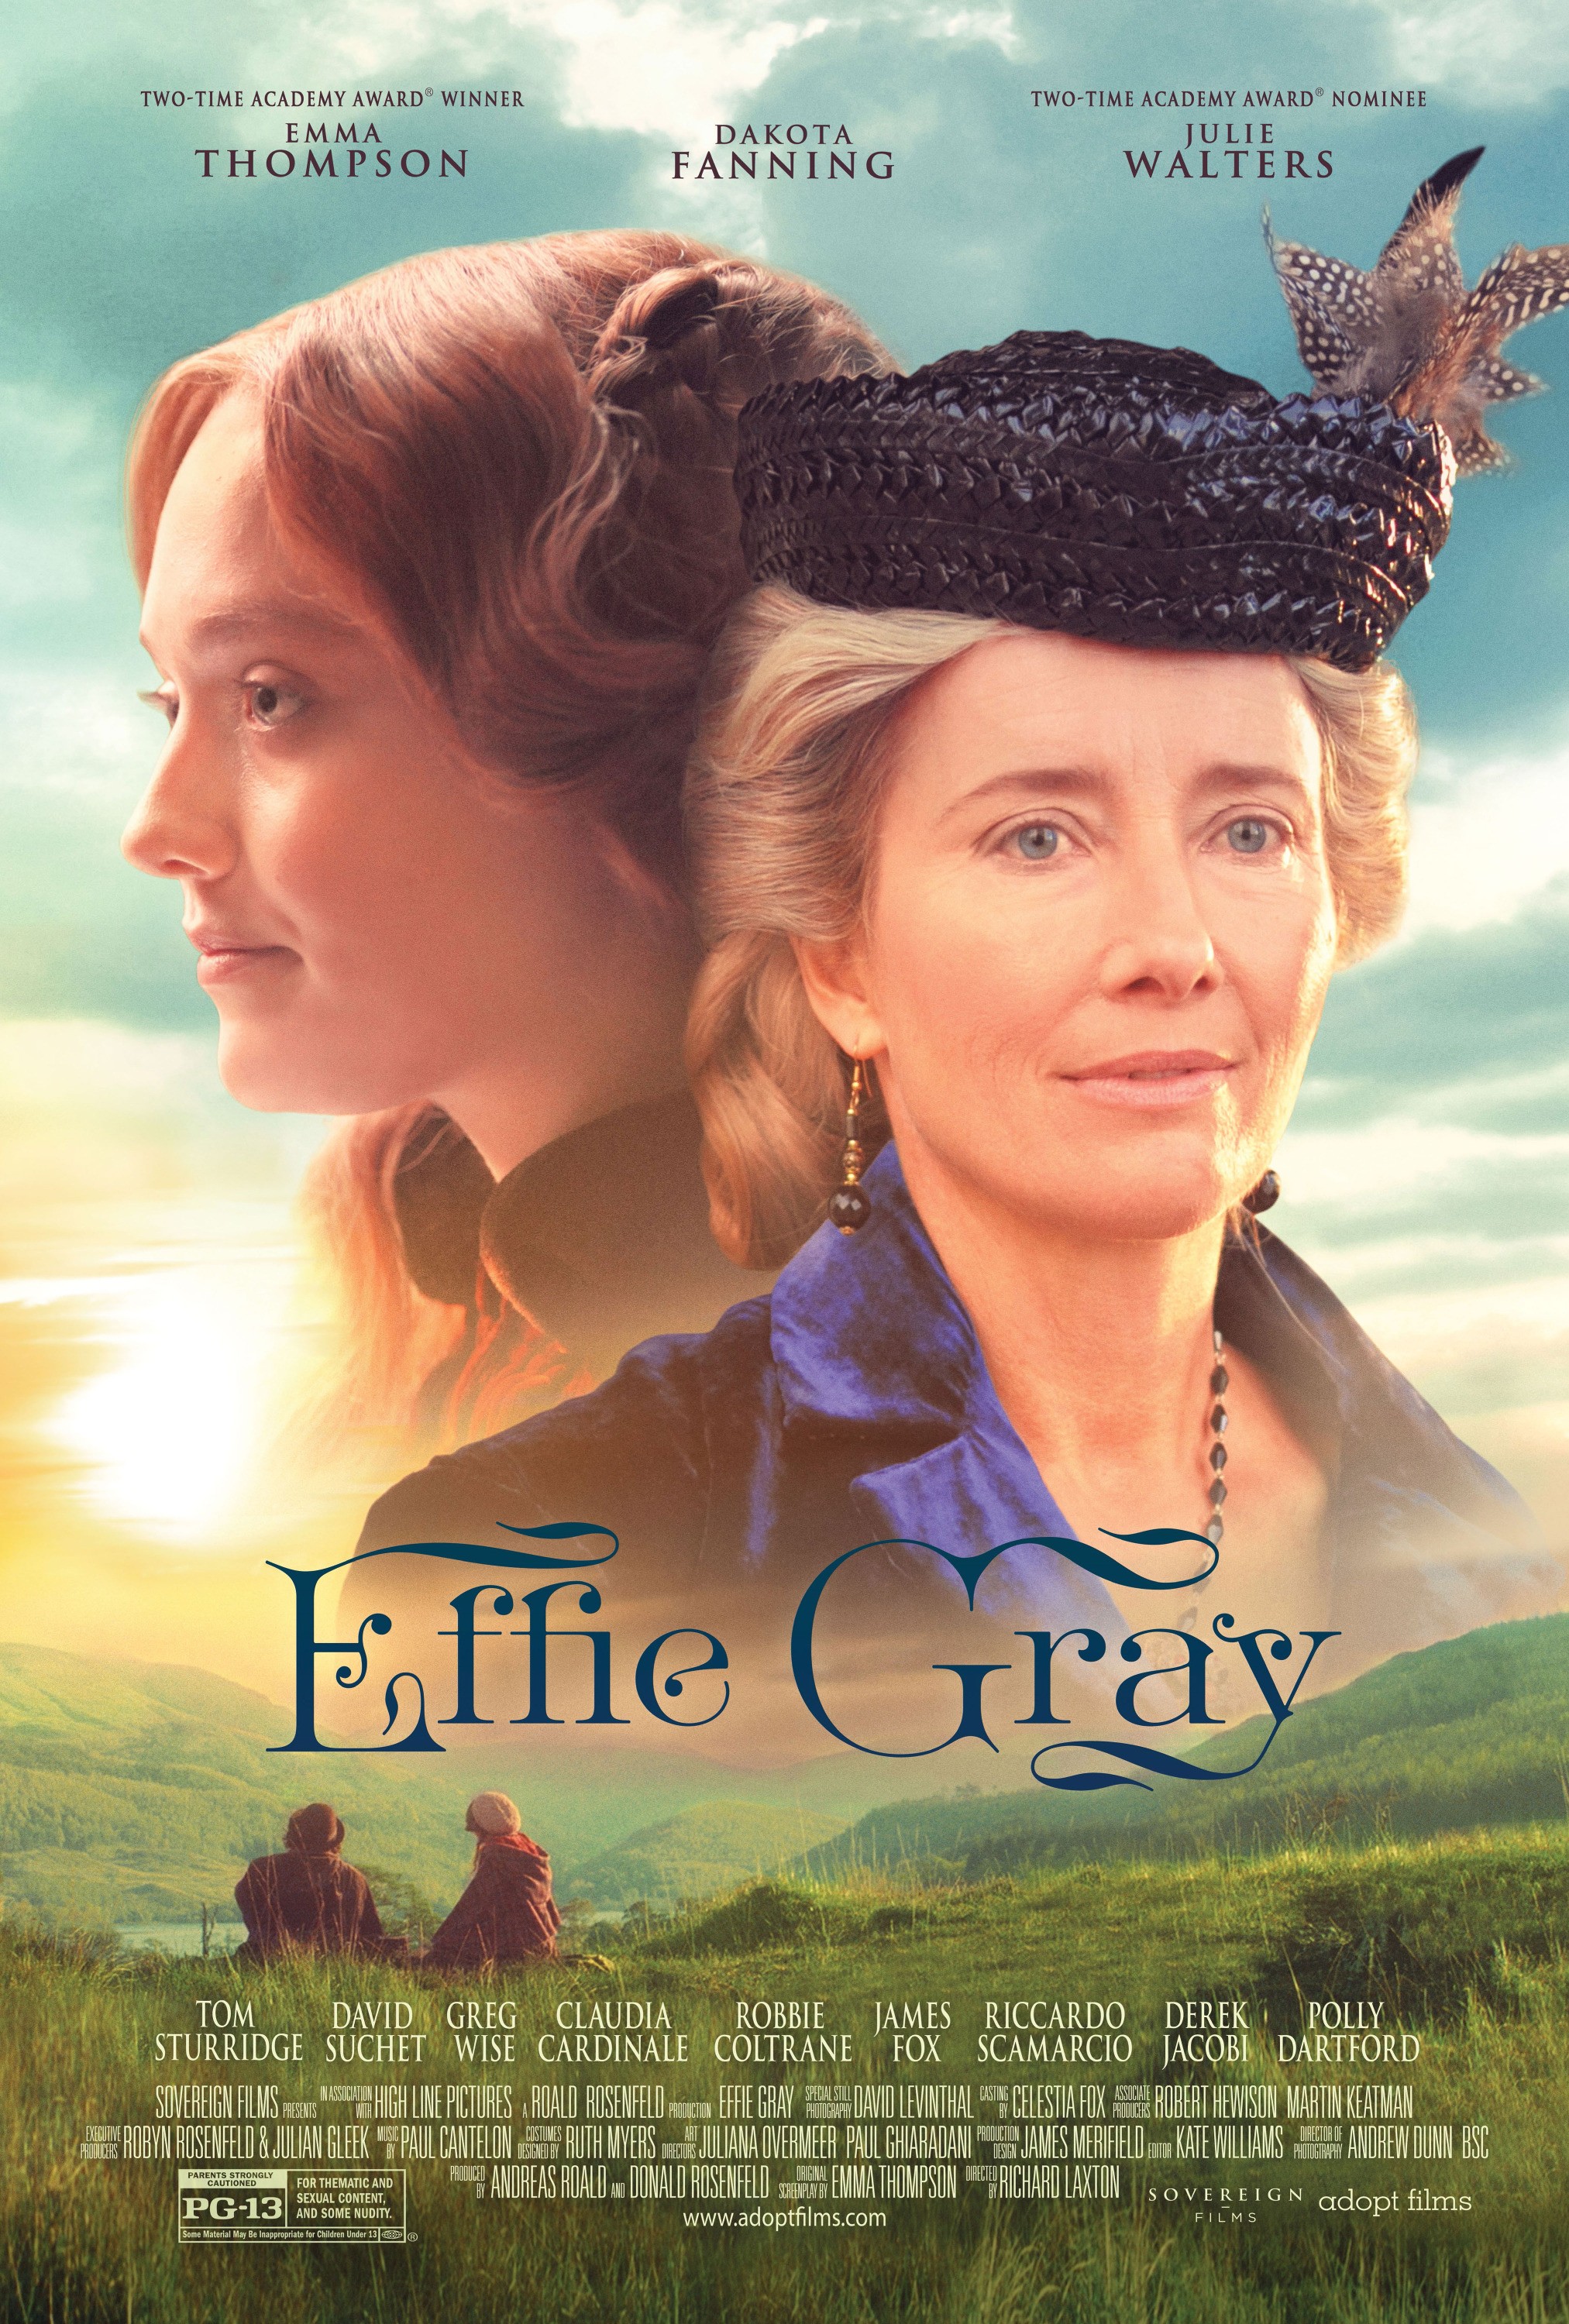 Mega Sized Movie Poster Image for Effie Gray (#3 of 3)